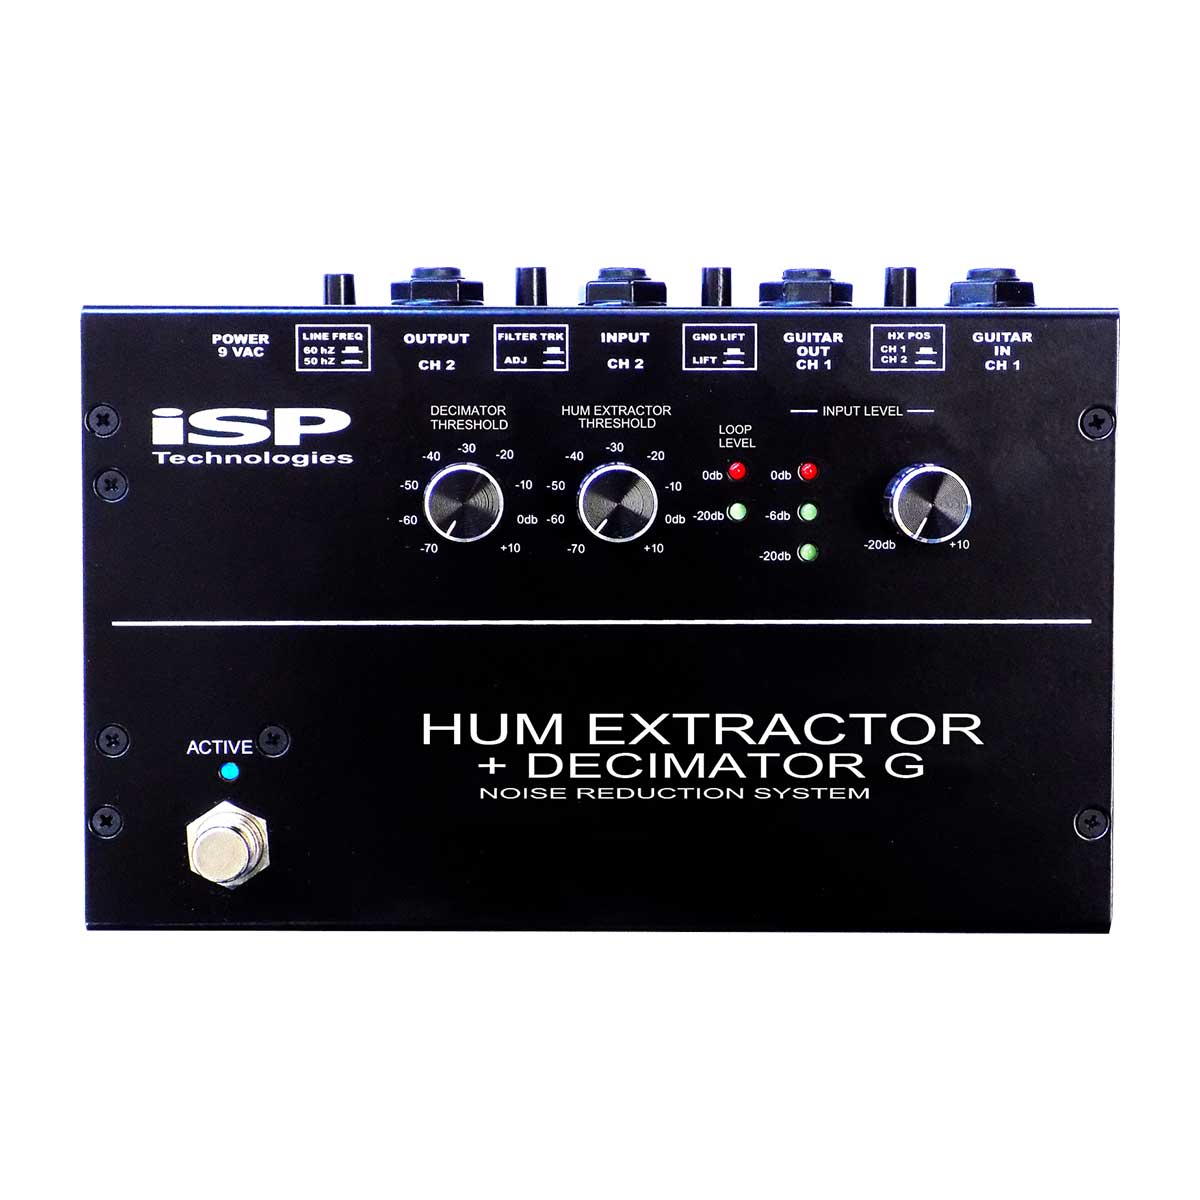 ISP Hum extractor and Decimator G